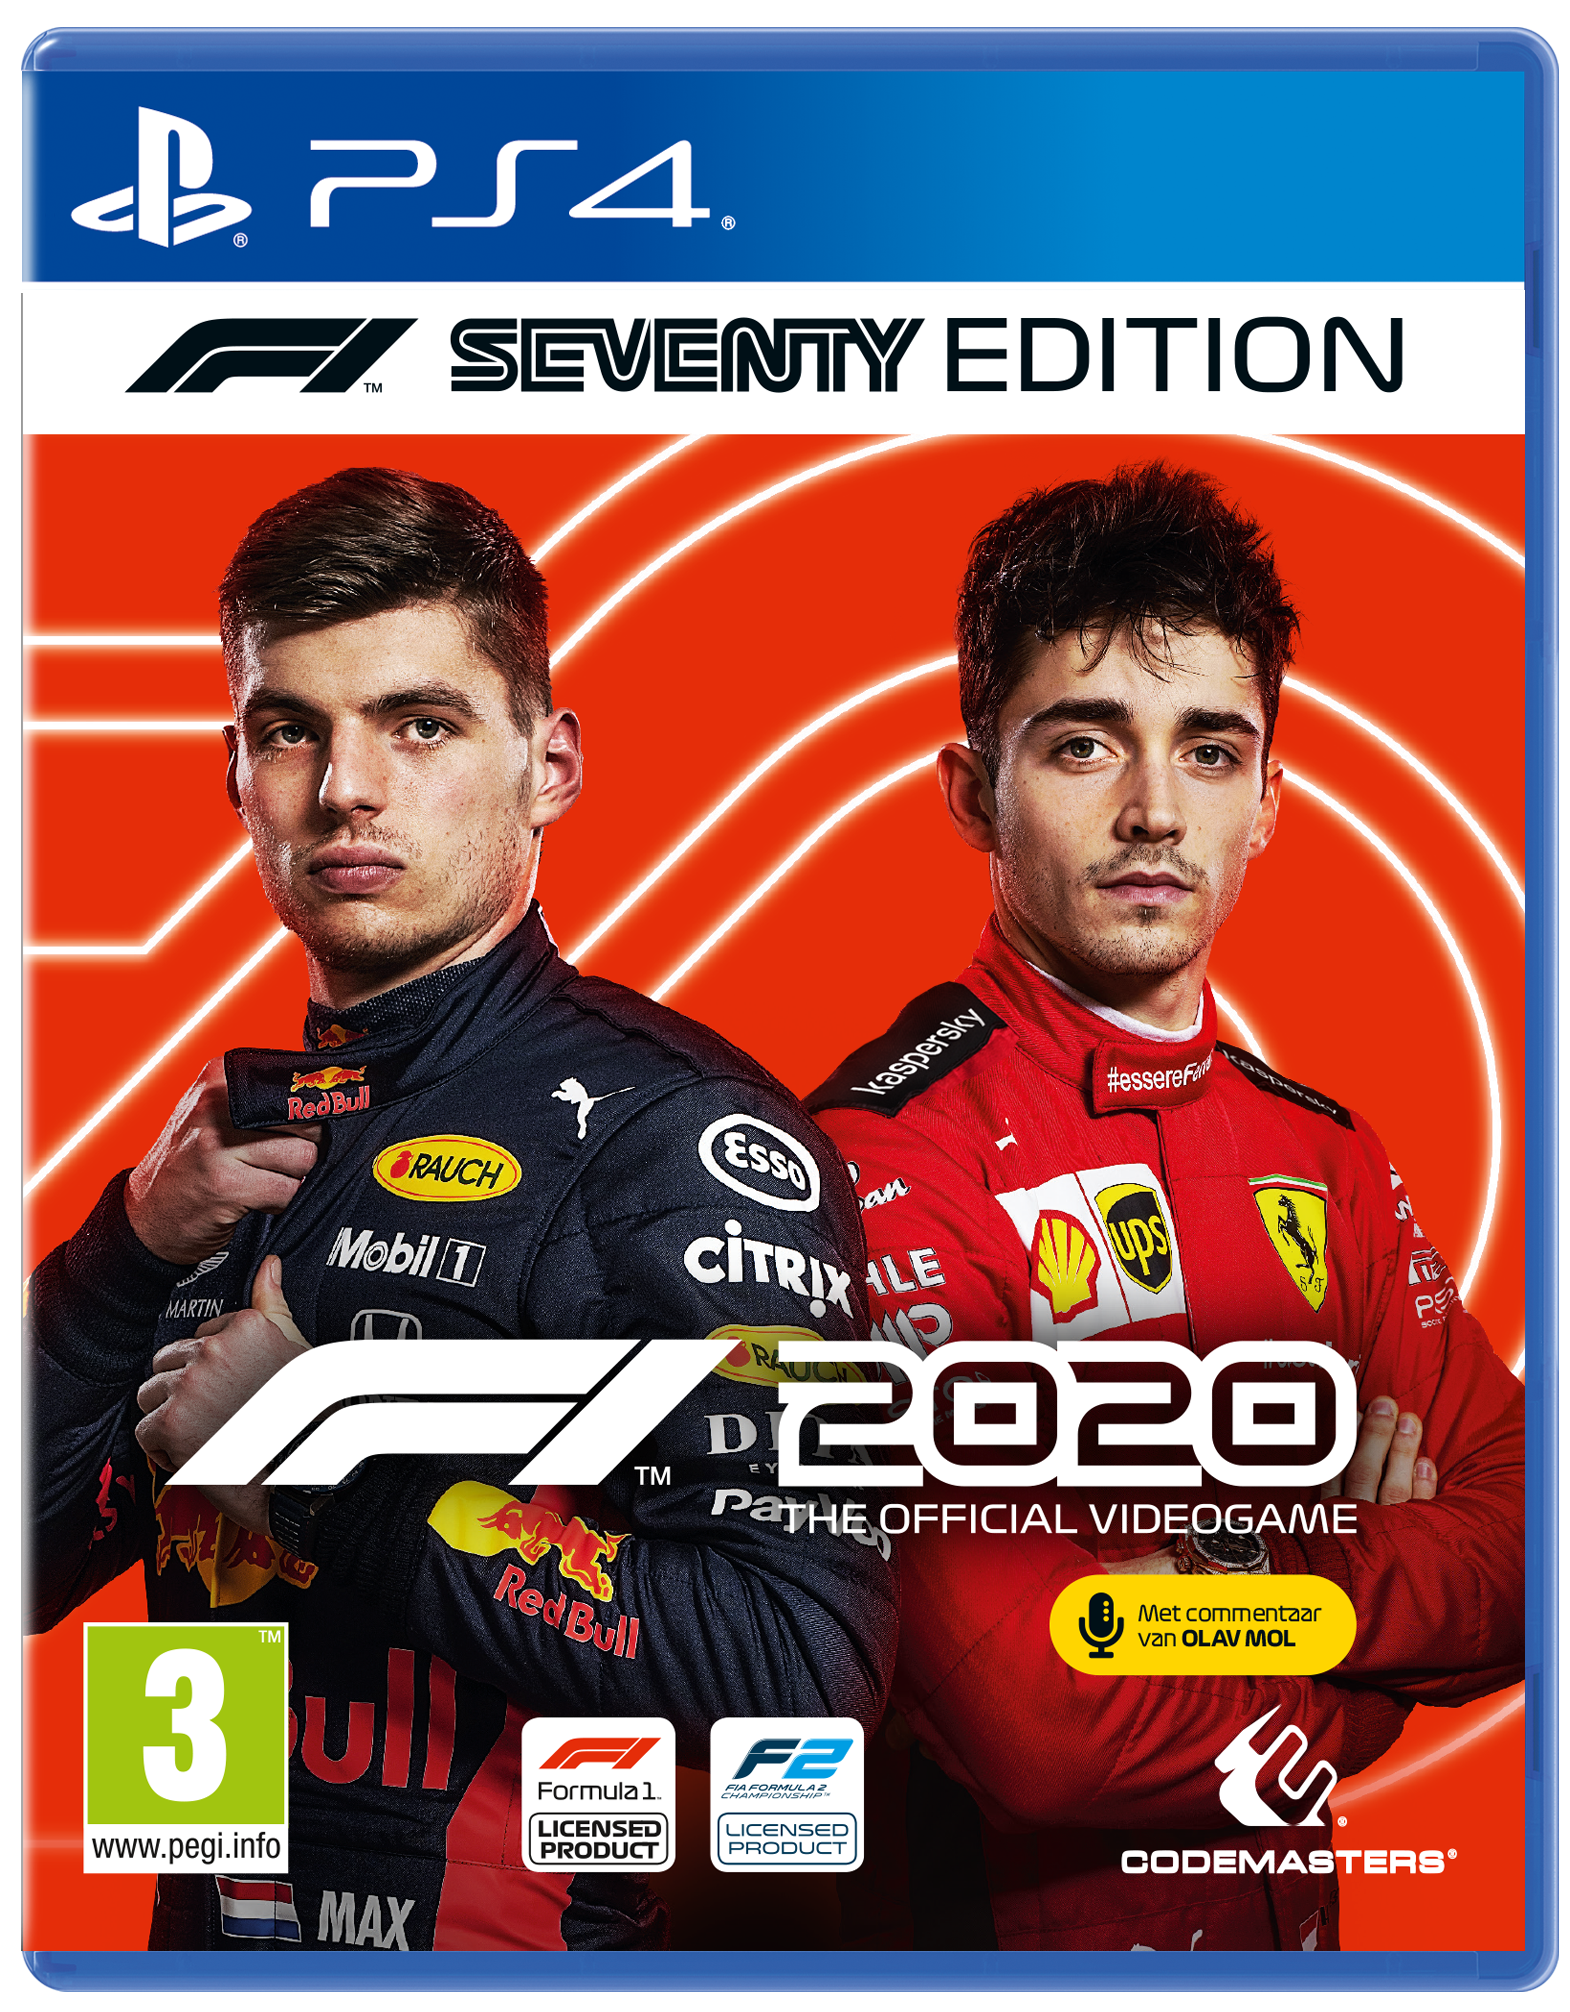 § F1 2020 - F1 Seventy Edition